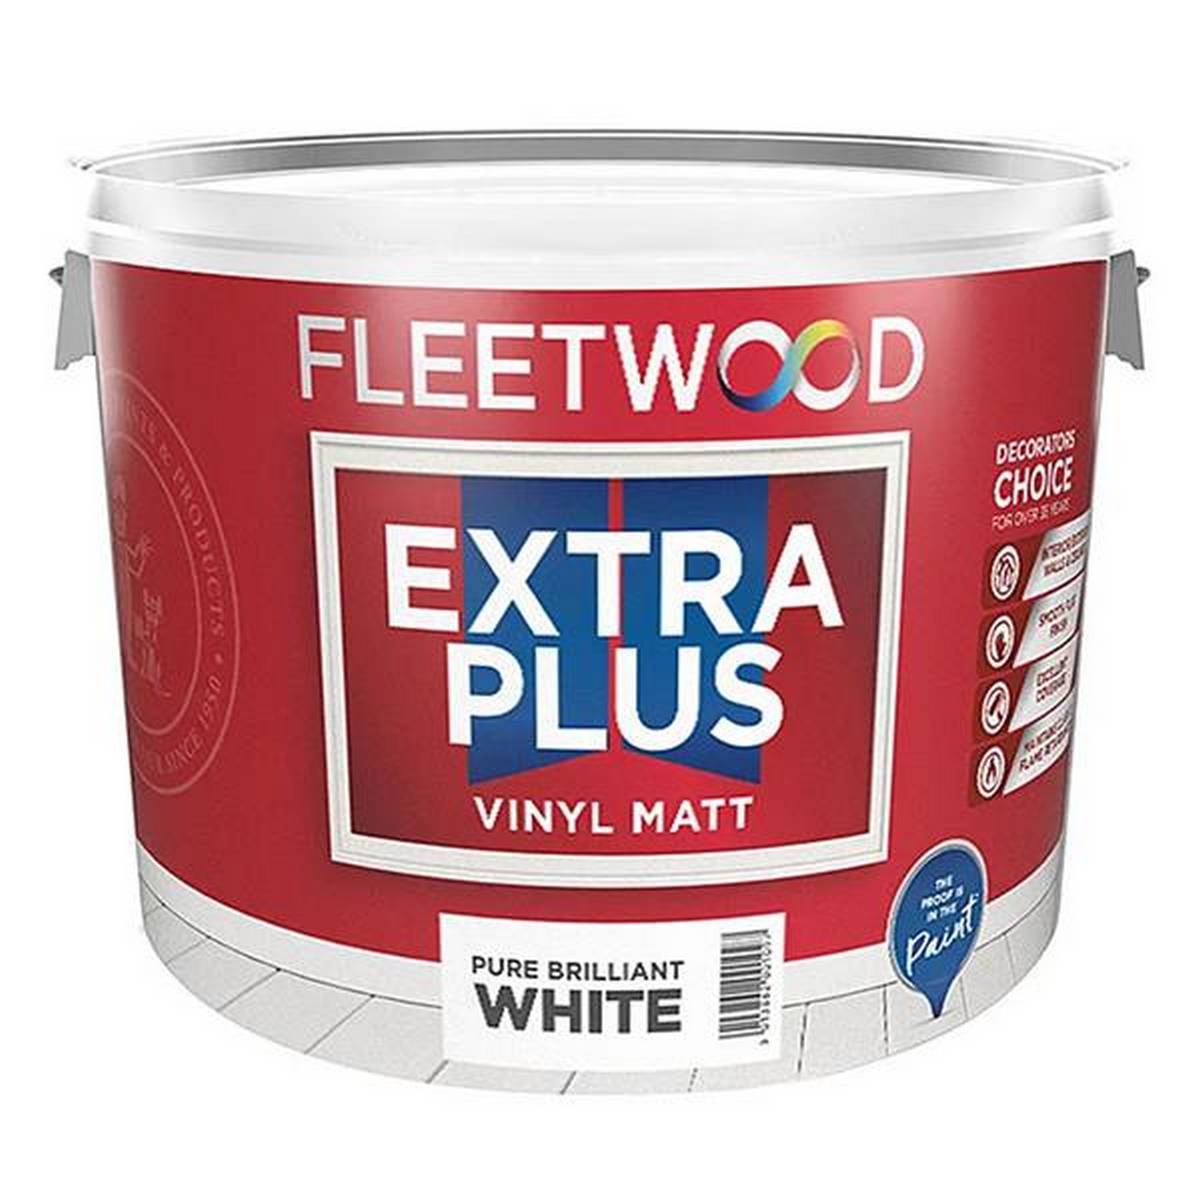 FLEETWOOD EXTRA PLUS VINYL MATT 10 LITRE - BRILLIANT WHITE